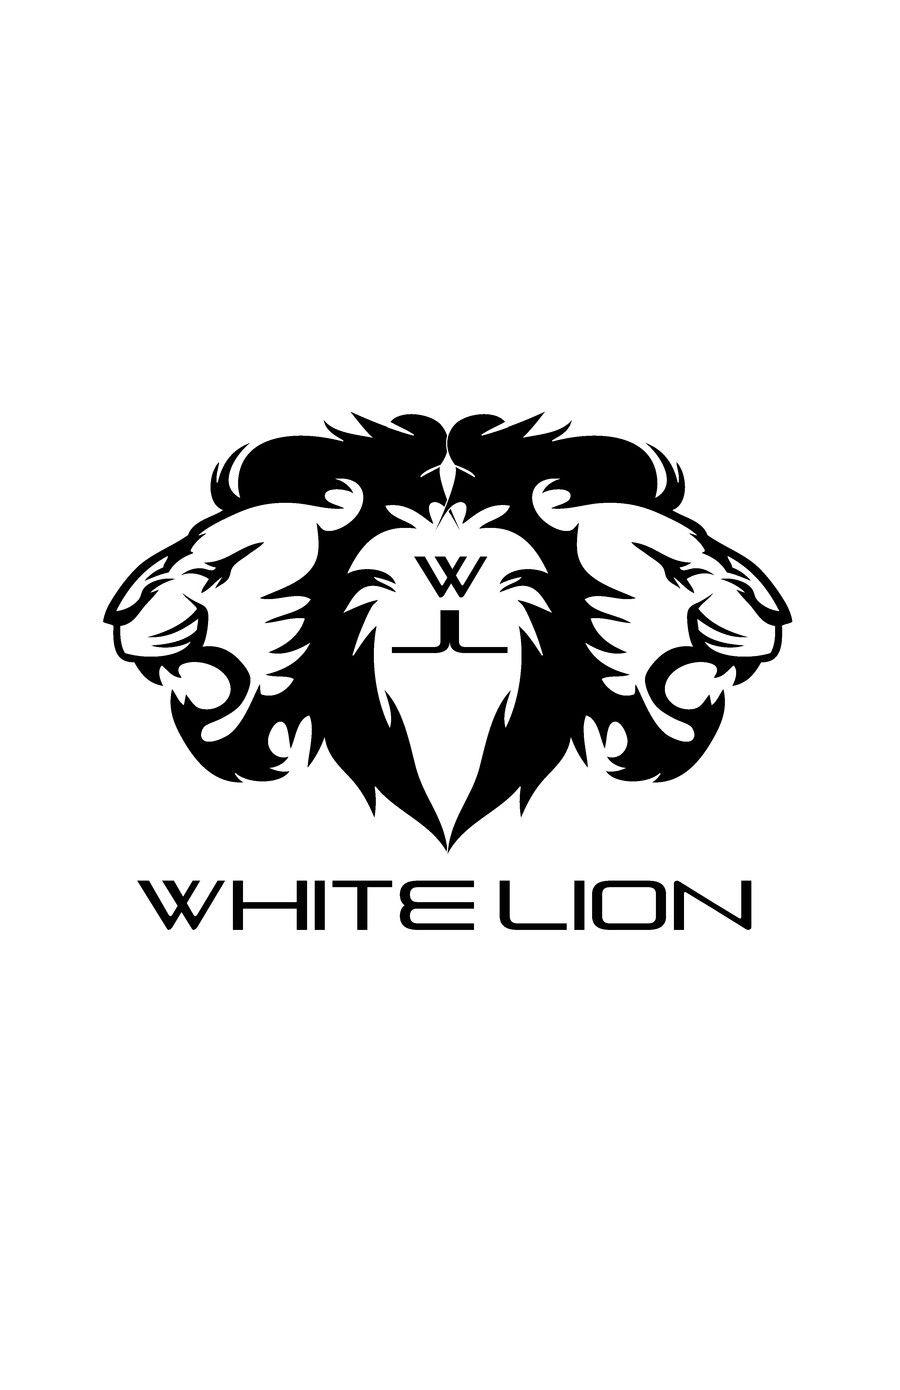 White Lion Logo - Entry #36 by erickburgos23 for White Lion (logo) | Freelancer